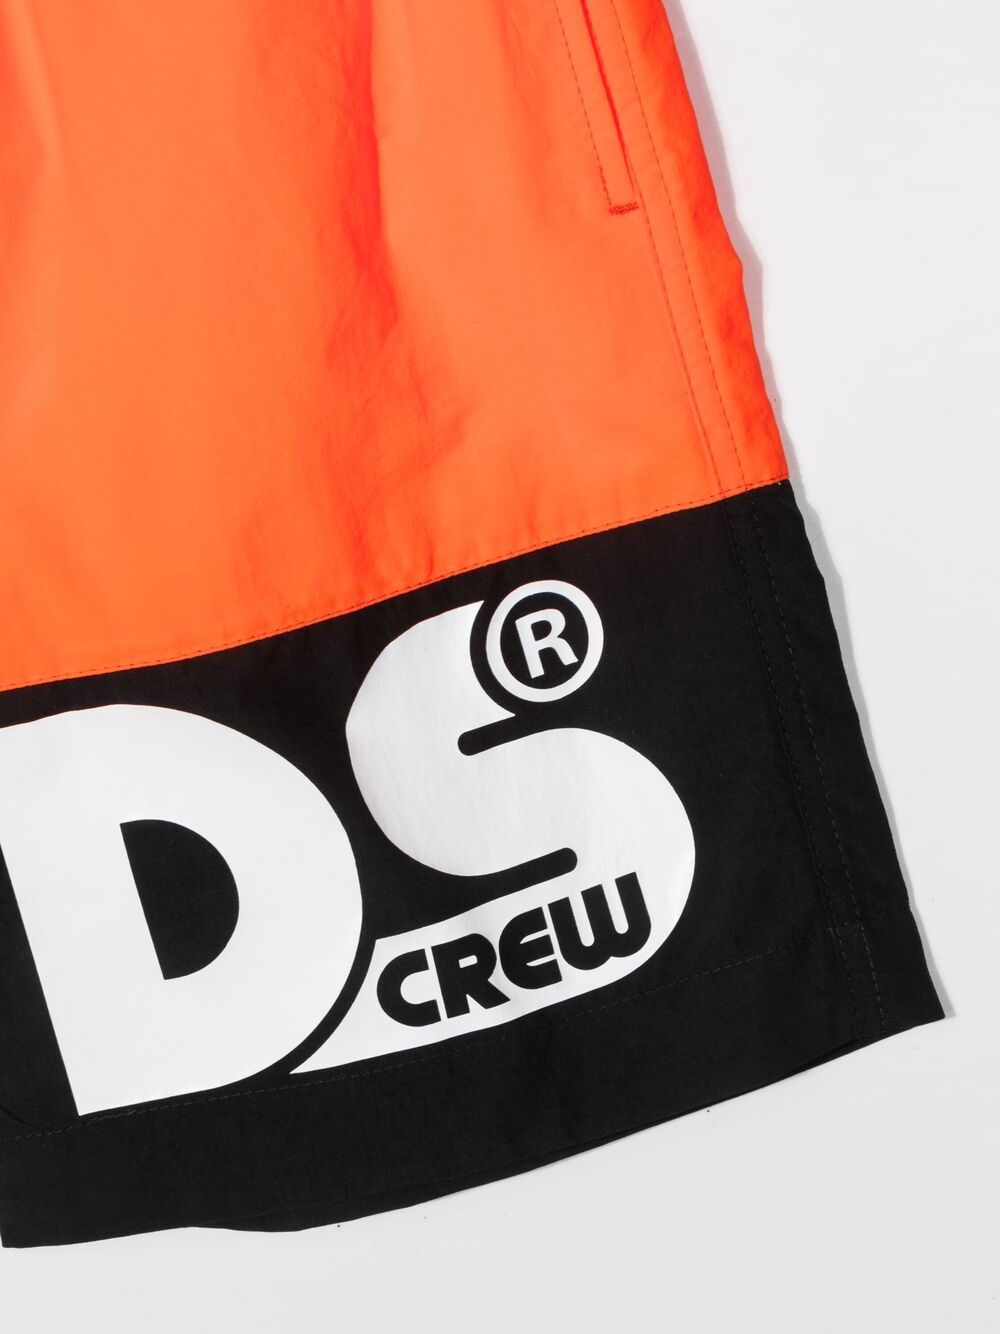 Shop Gcds Logo-print Swim Shorts In Orange